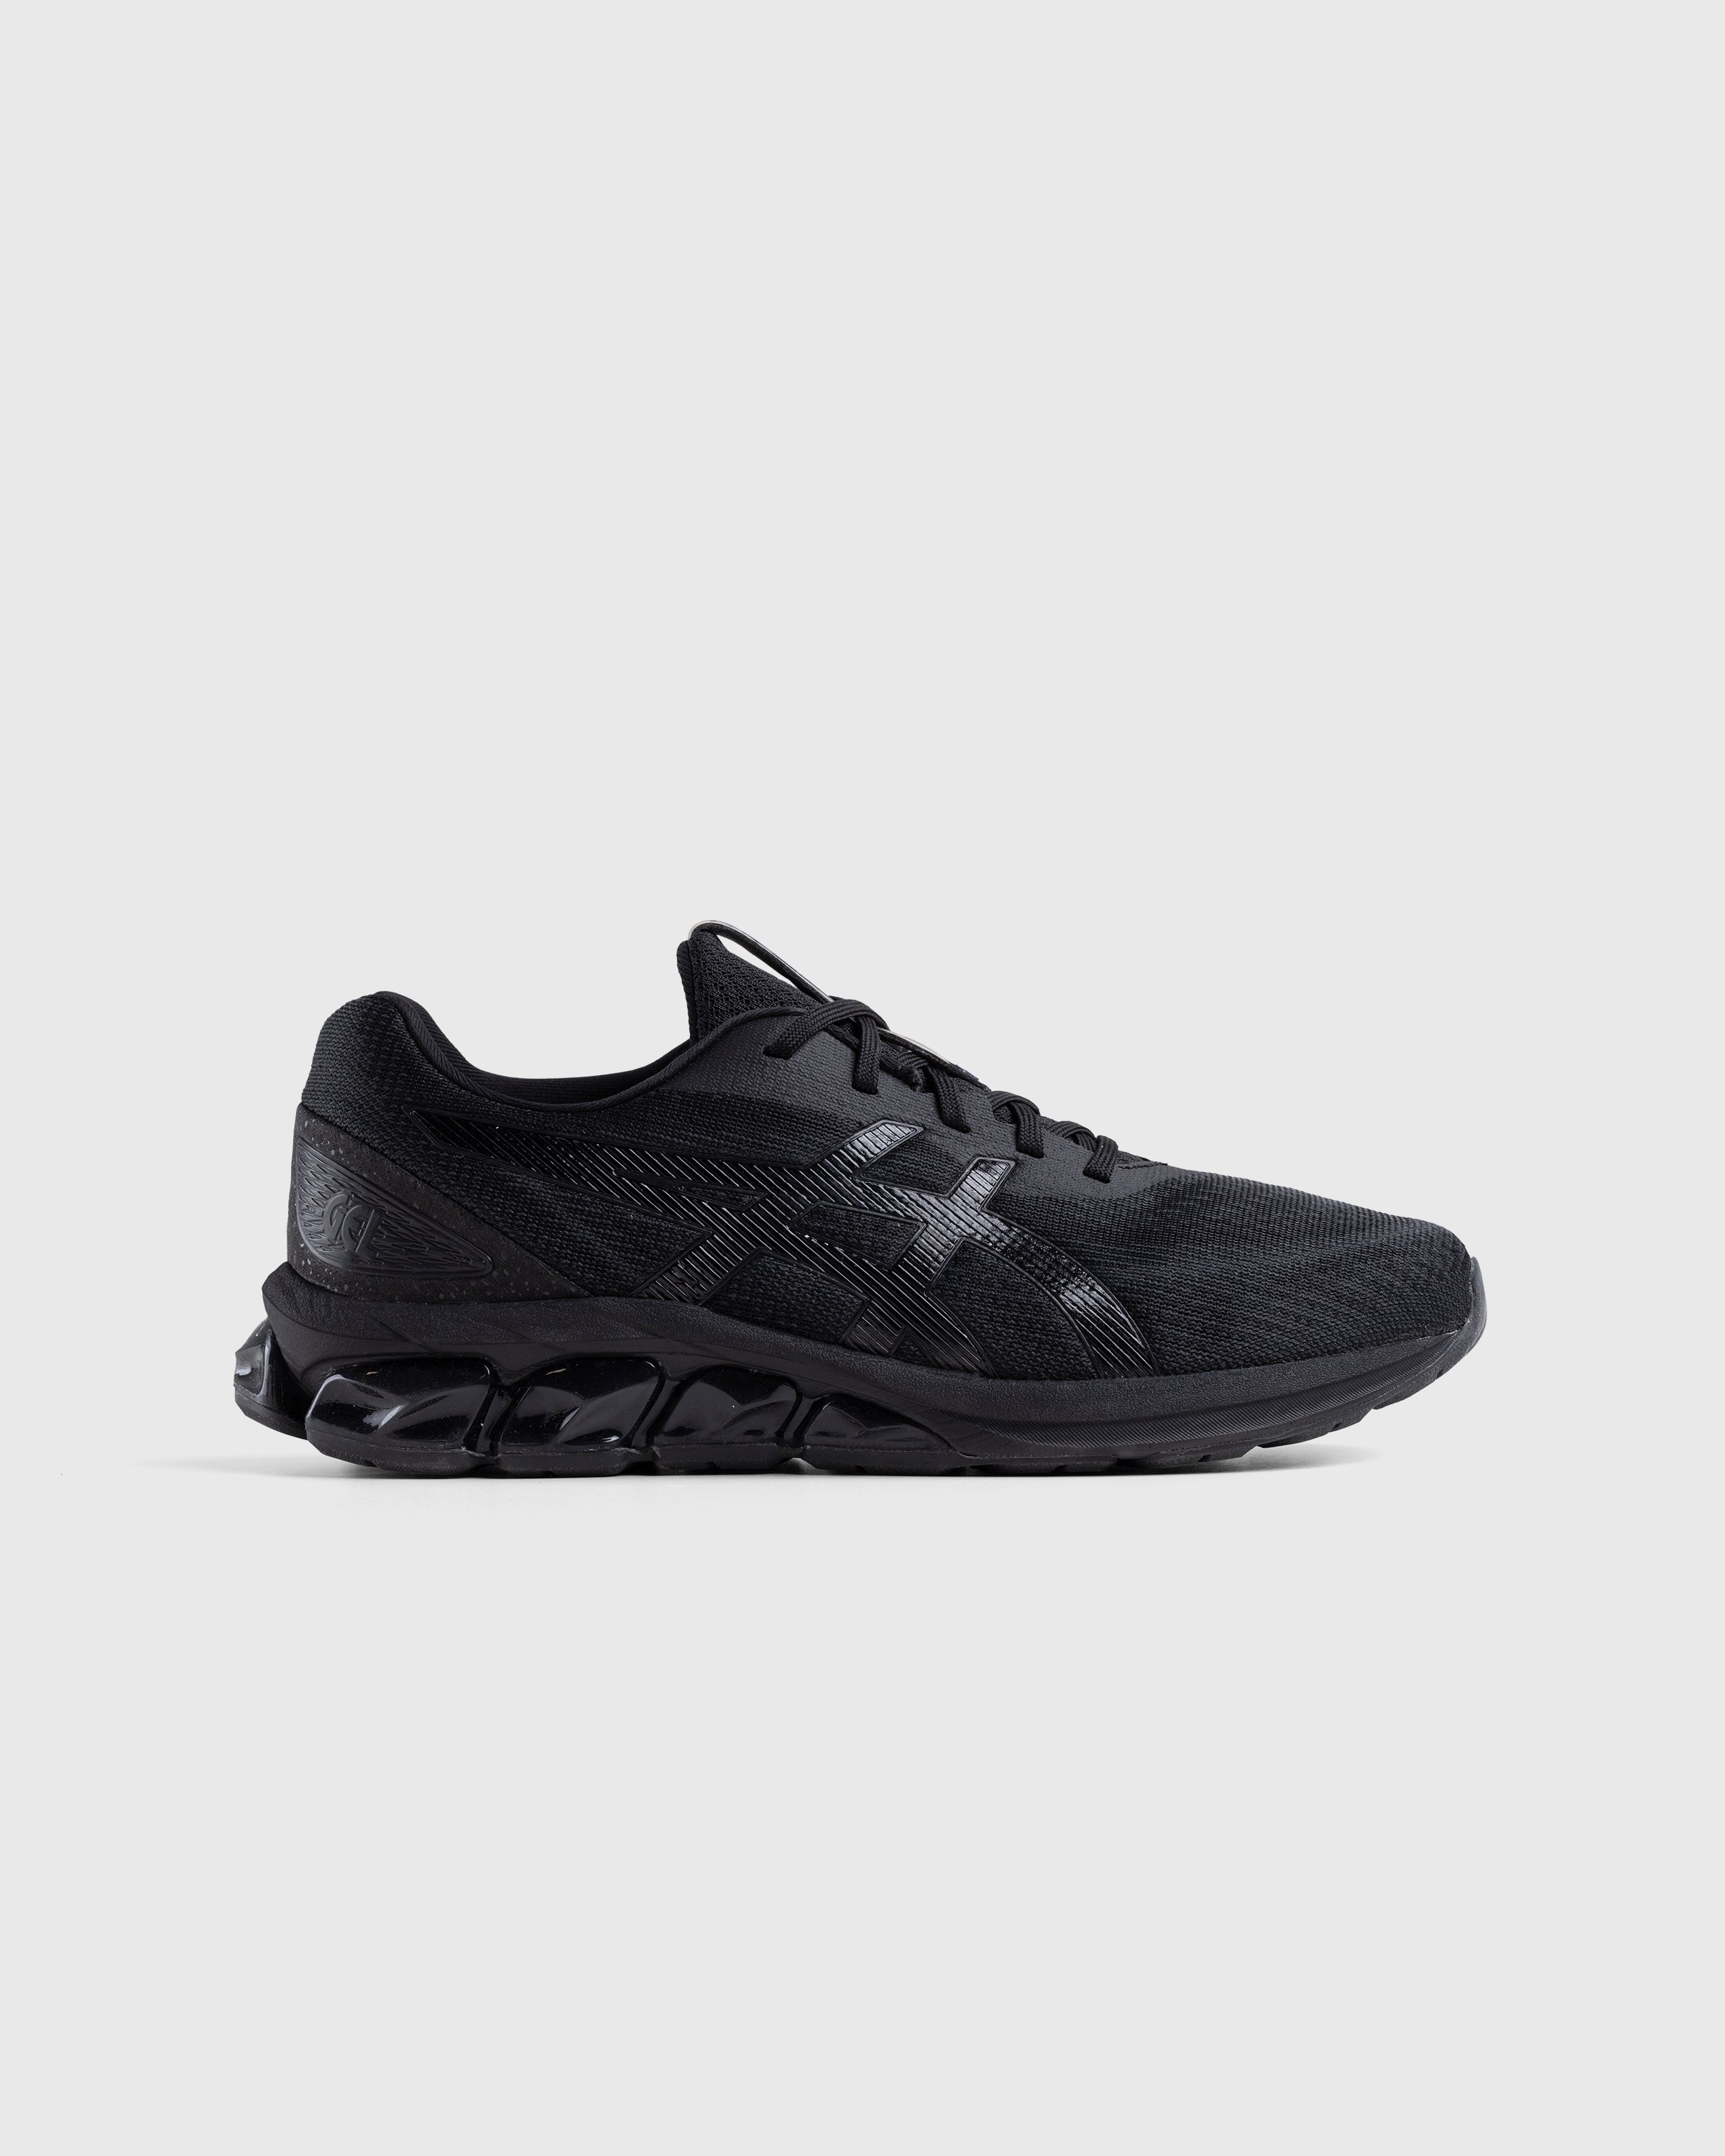 asics – Gel-Quantum 180 VII Black/Black - Low Top Sneakers - Black - Image 1